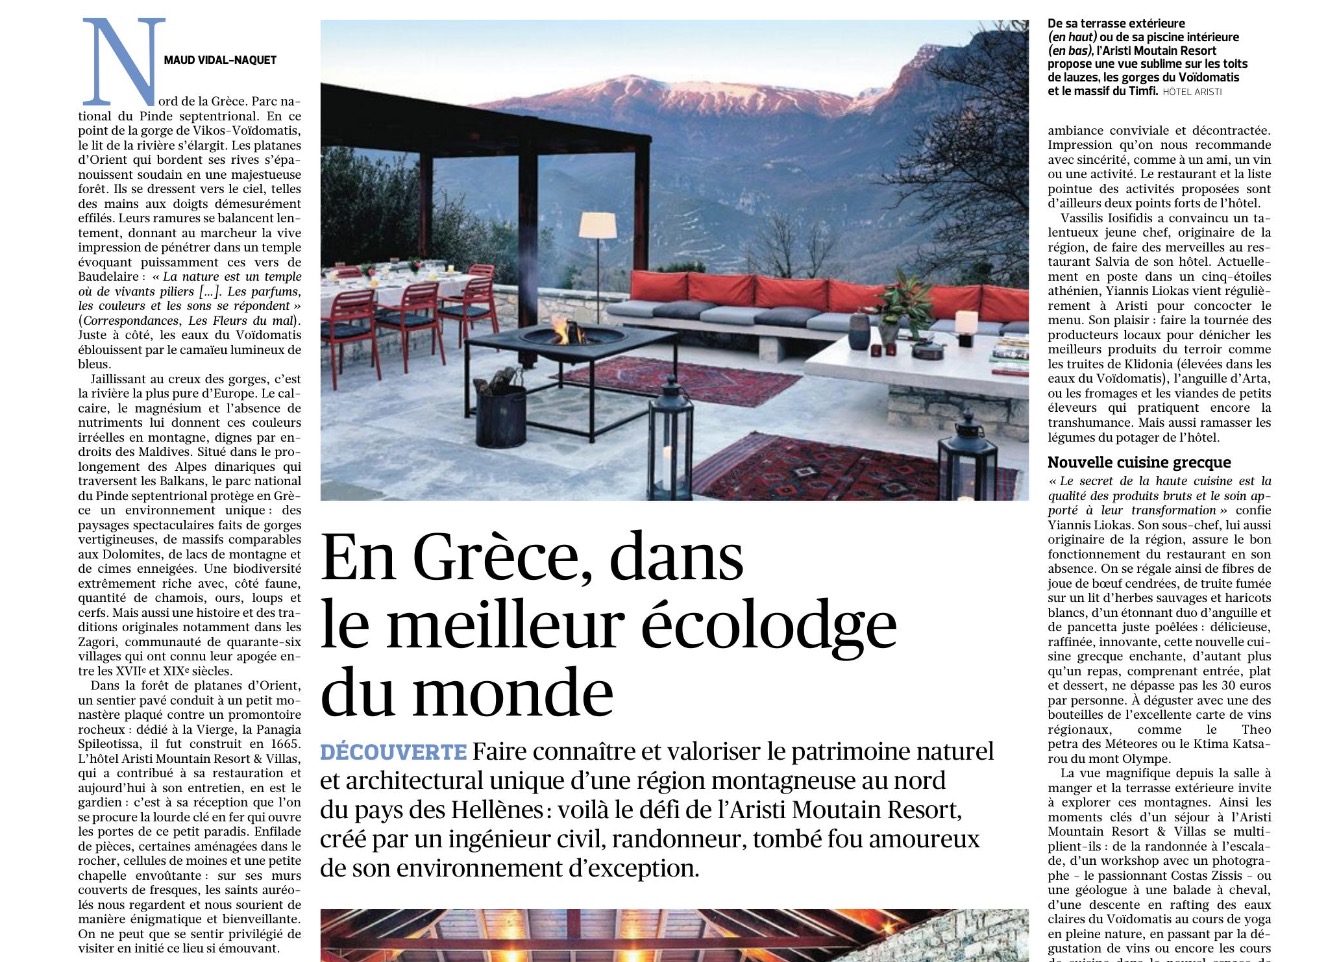 Paris “Le Figaro” 2018 – reference to the interior atmosphere of Aristi Mountain Resort